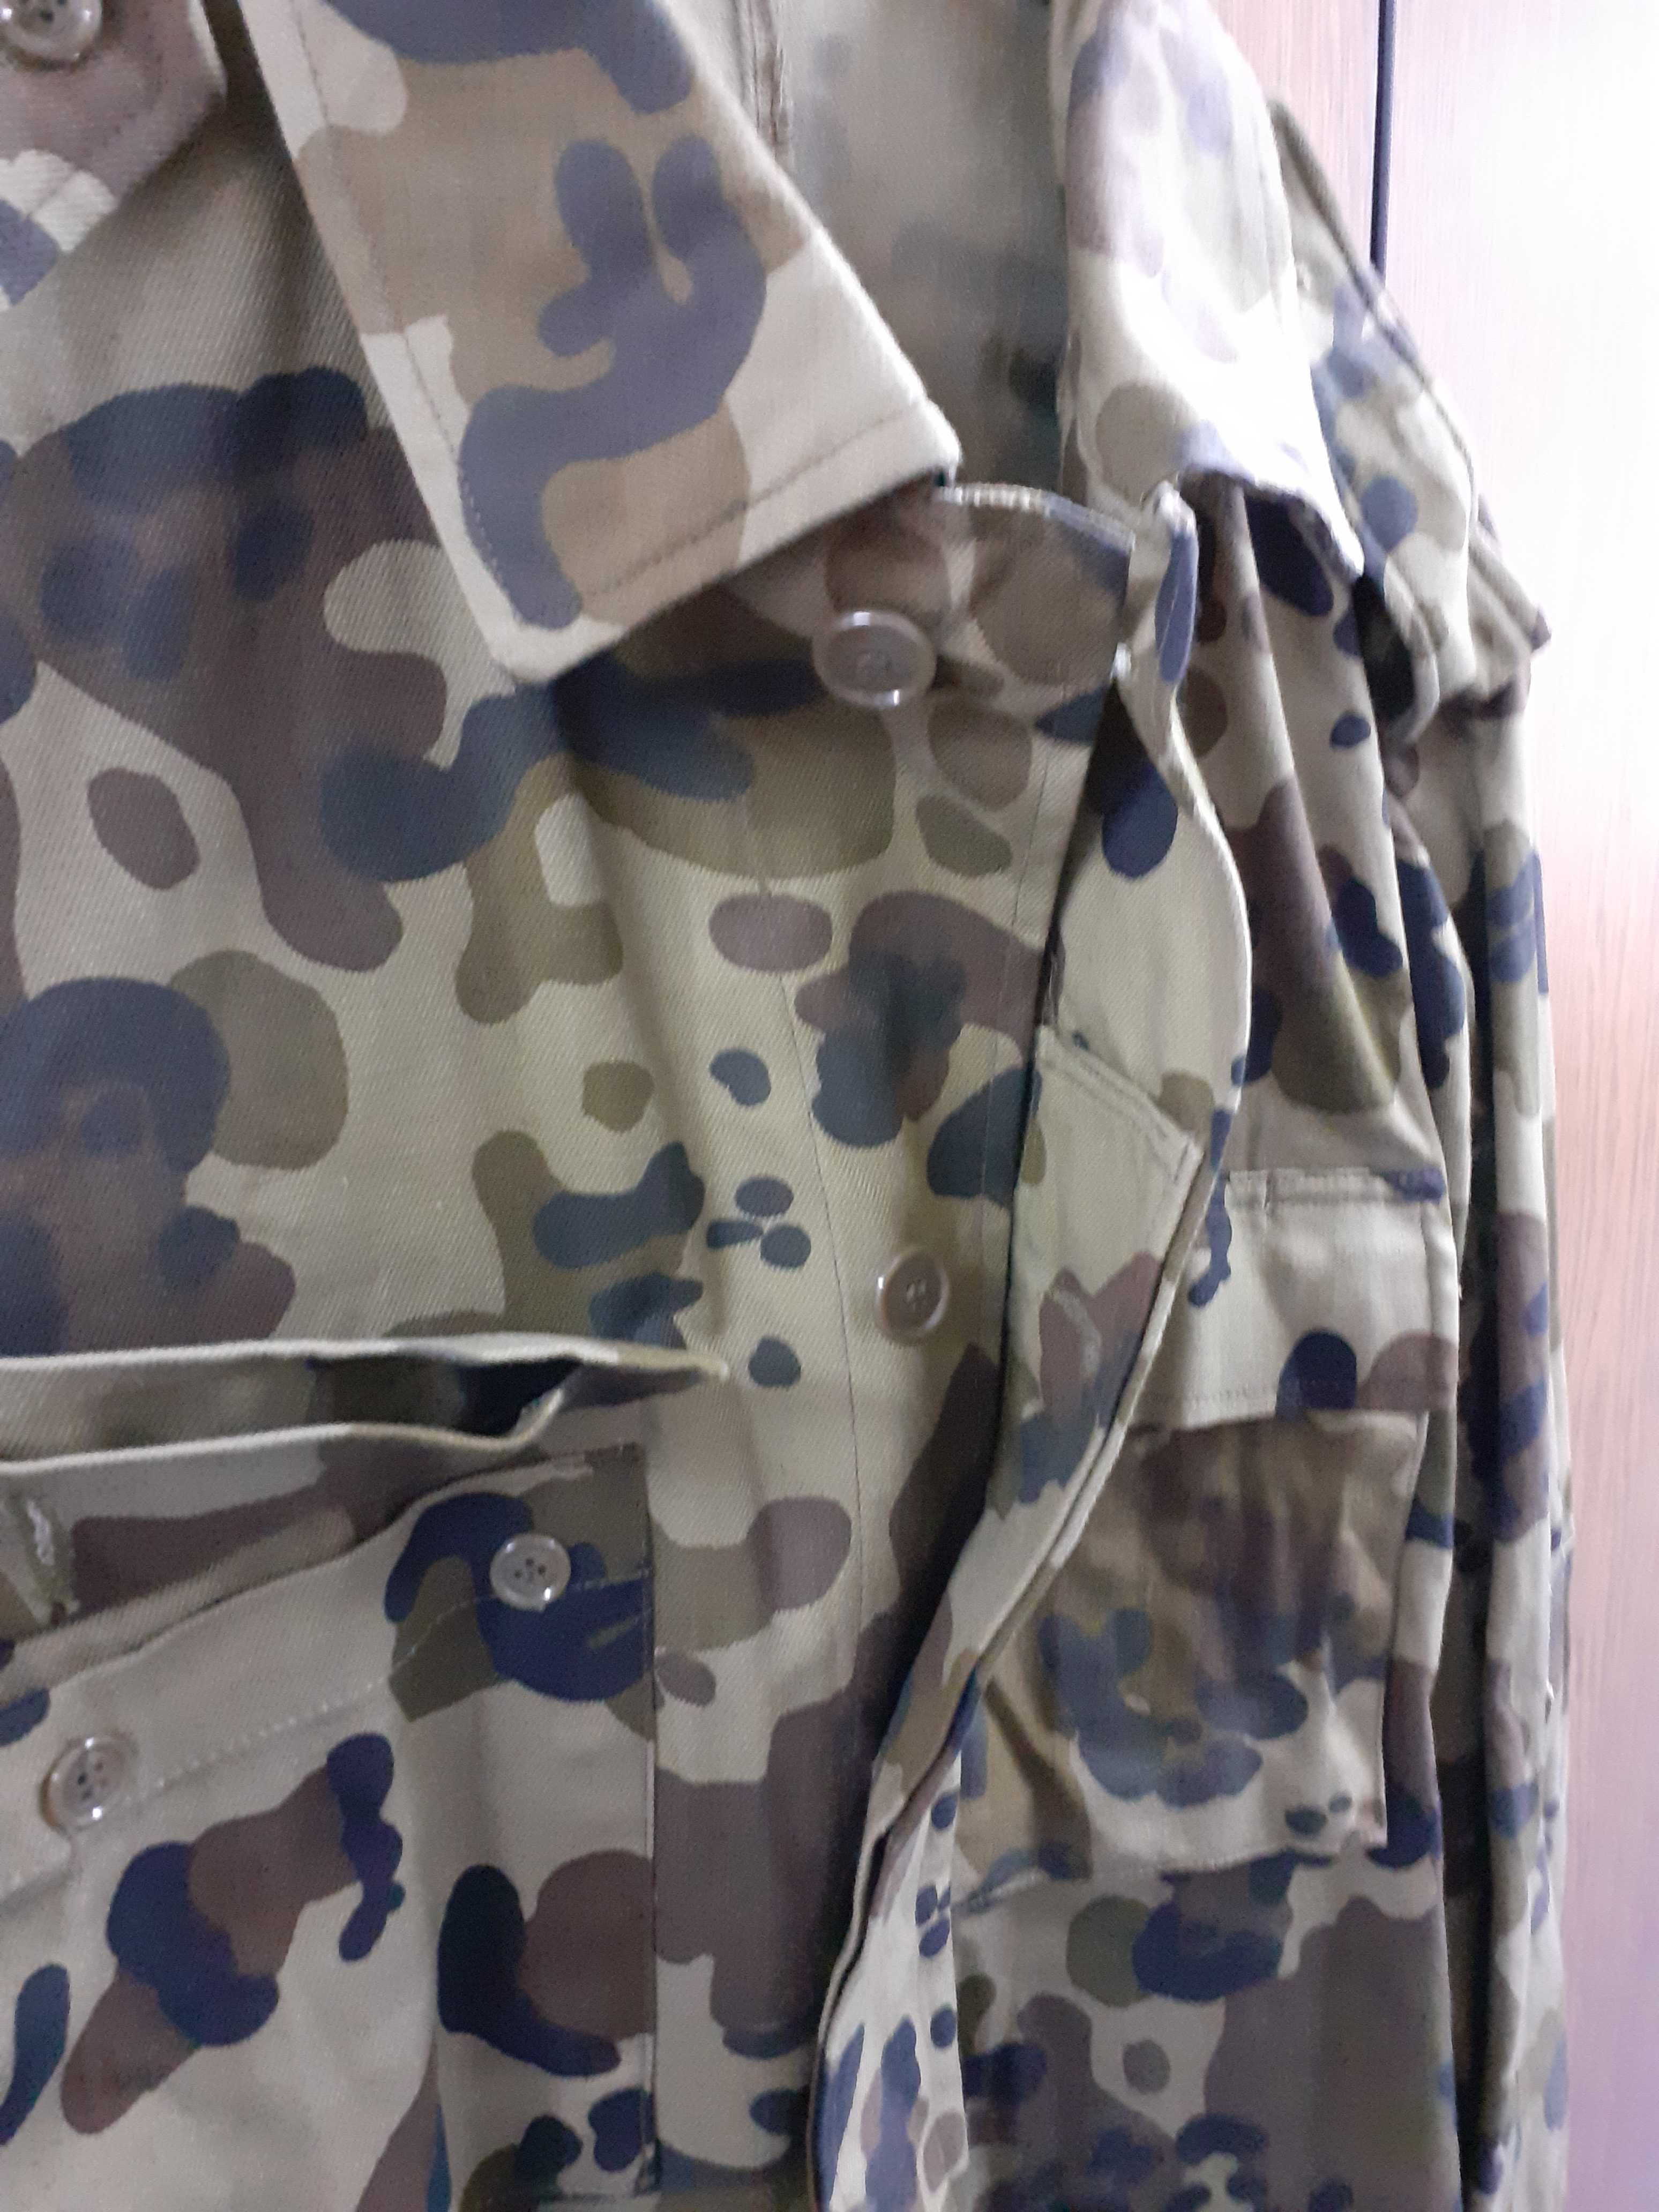 Veston militar camuflaj tip "fleck", armata romana, model 1994